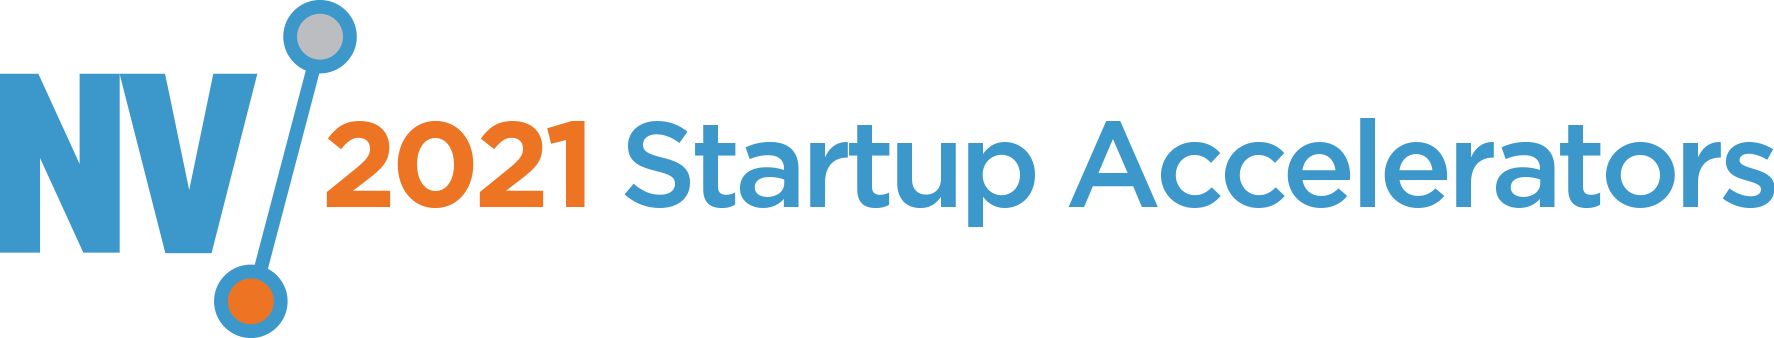 New Ventures Startup Accelerators logo